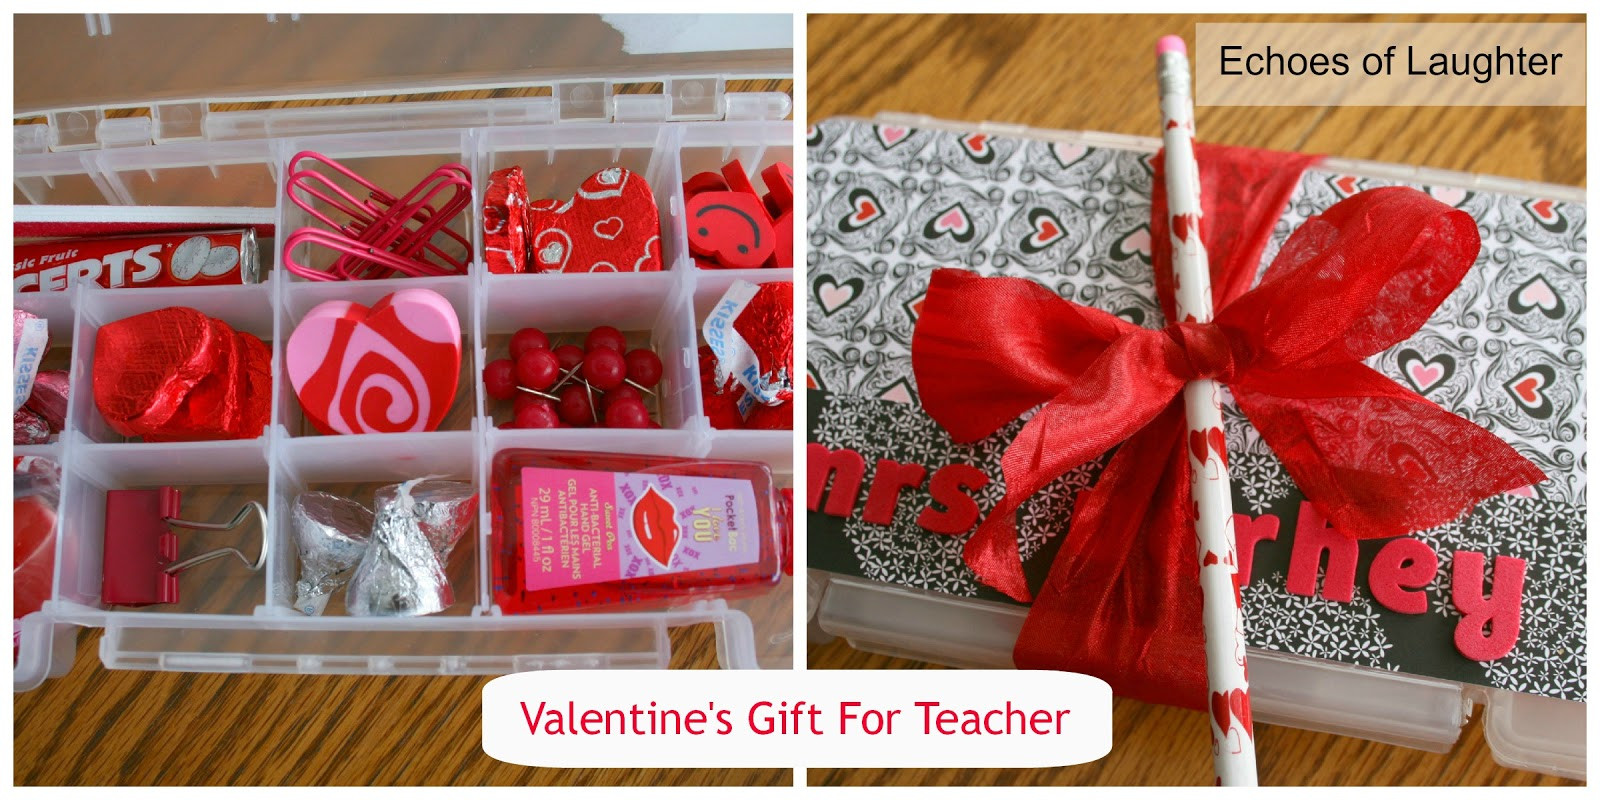 Teacher Valentines Gift Ideas
 10 Inspiring Valentine s Ideas Echoes of Laughter